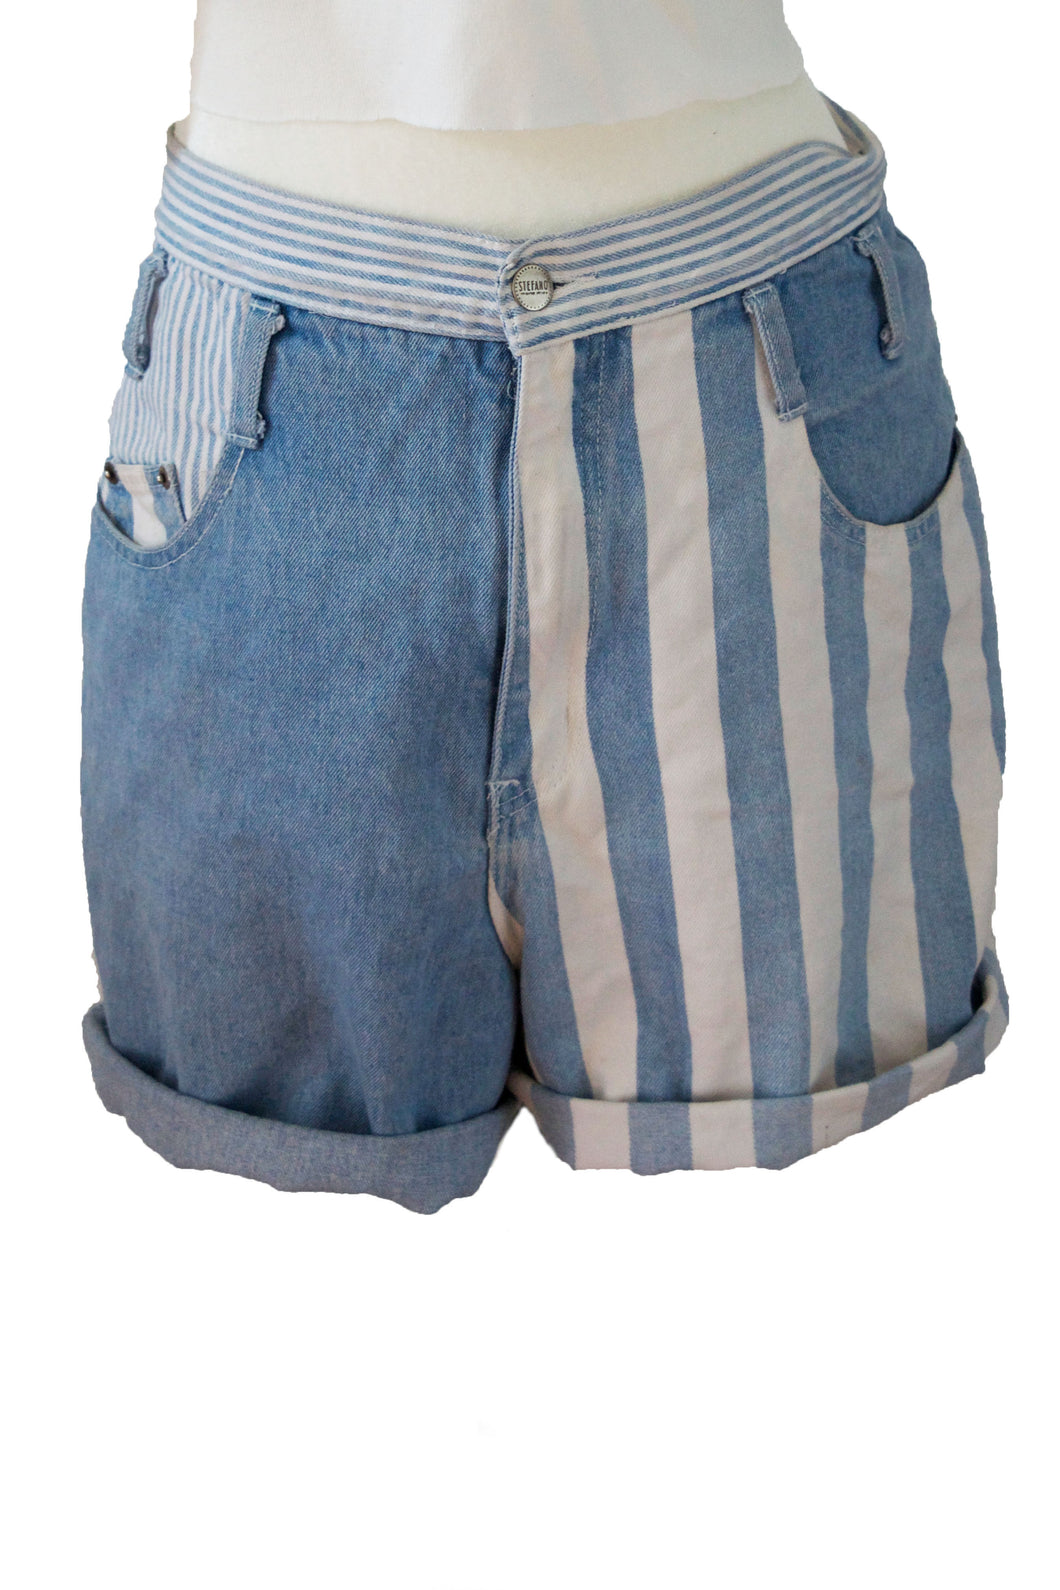 90's Striped Denim Shorts